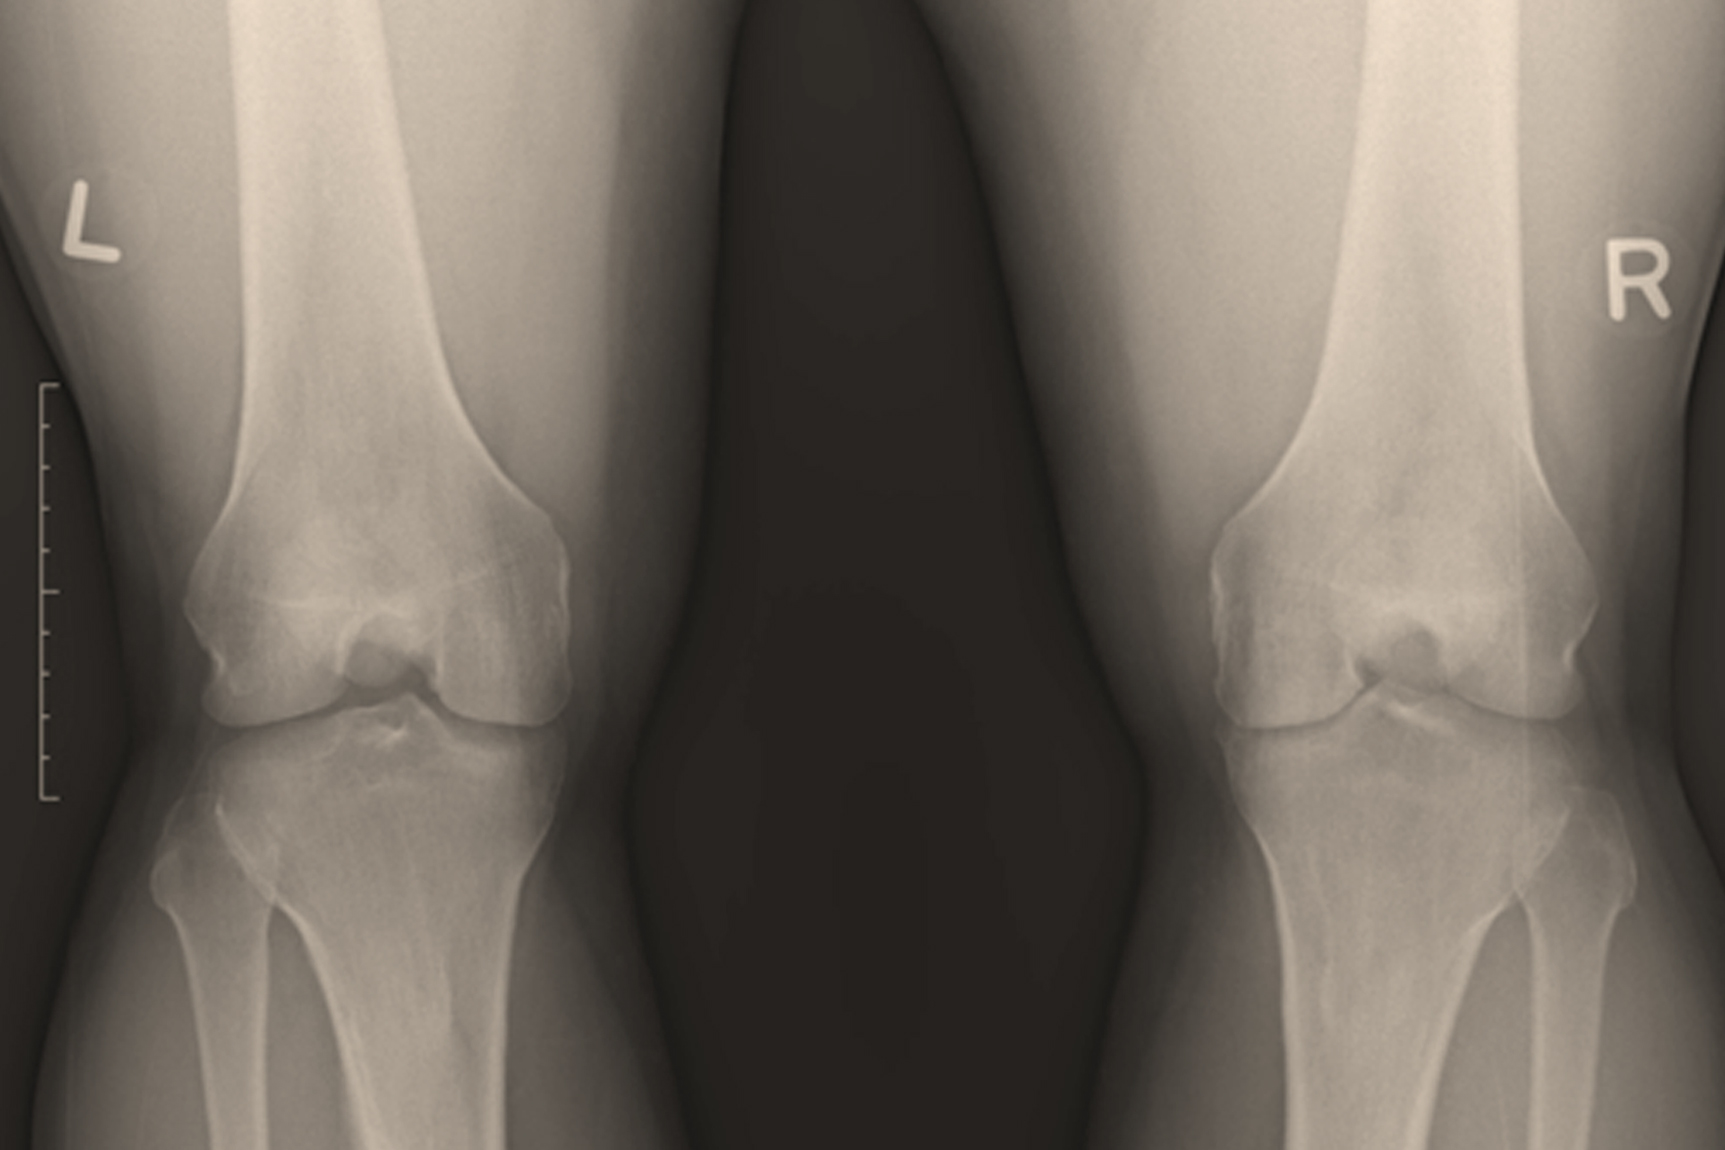 Knee Osteoarthritis Treatment Injections Fibroblast Human Growth Factor